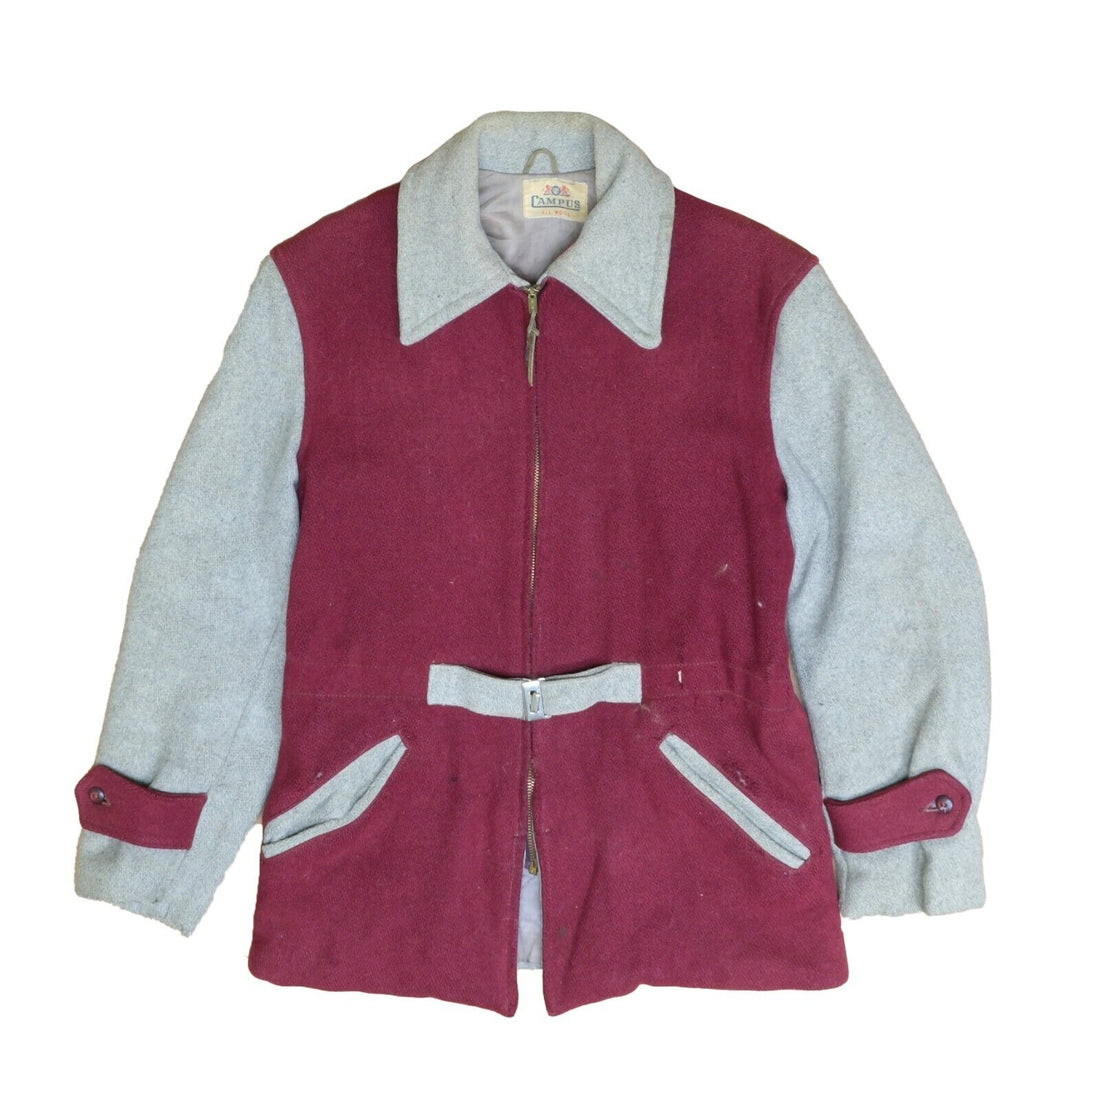 Vintage Campus Wool Coat Jacket Size Medium Red Gray